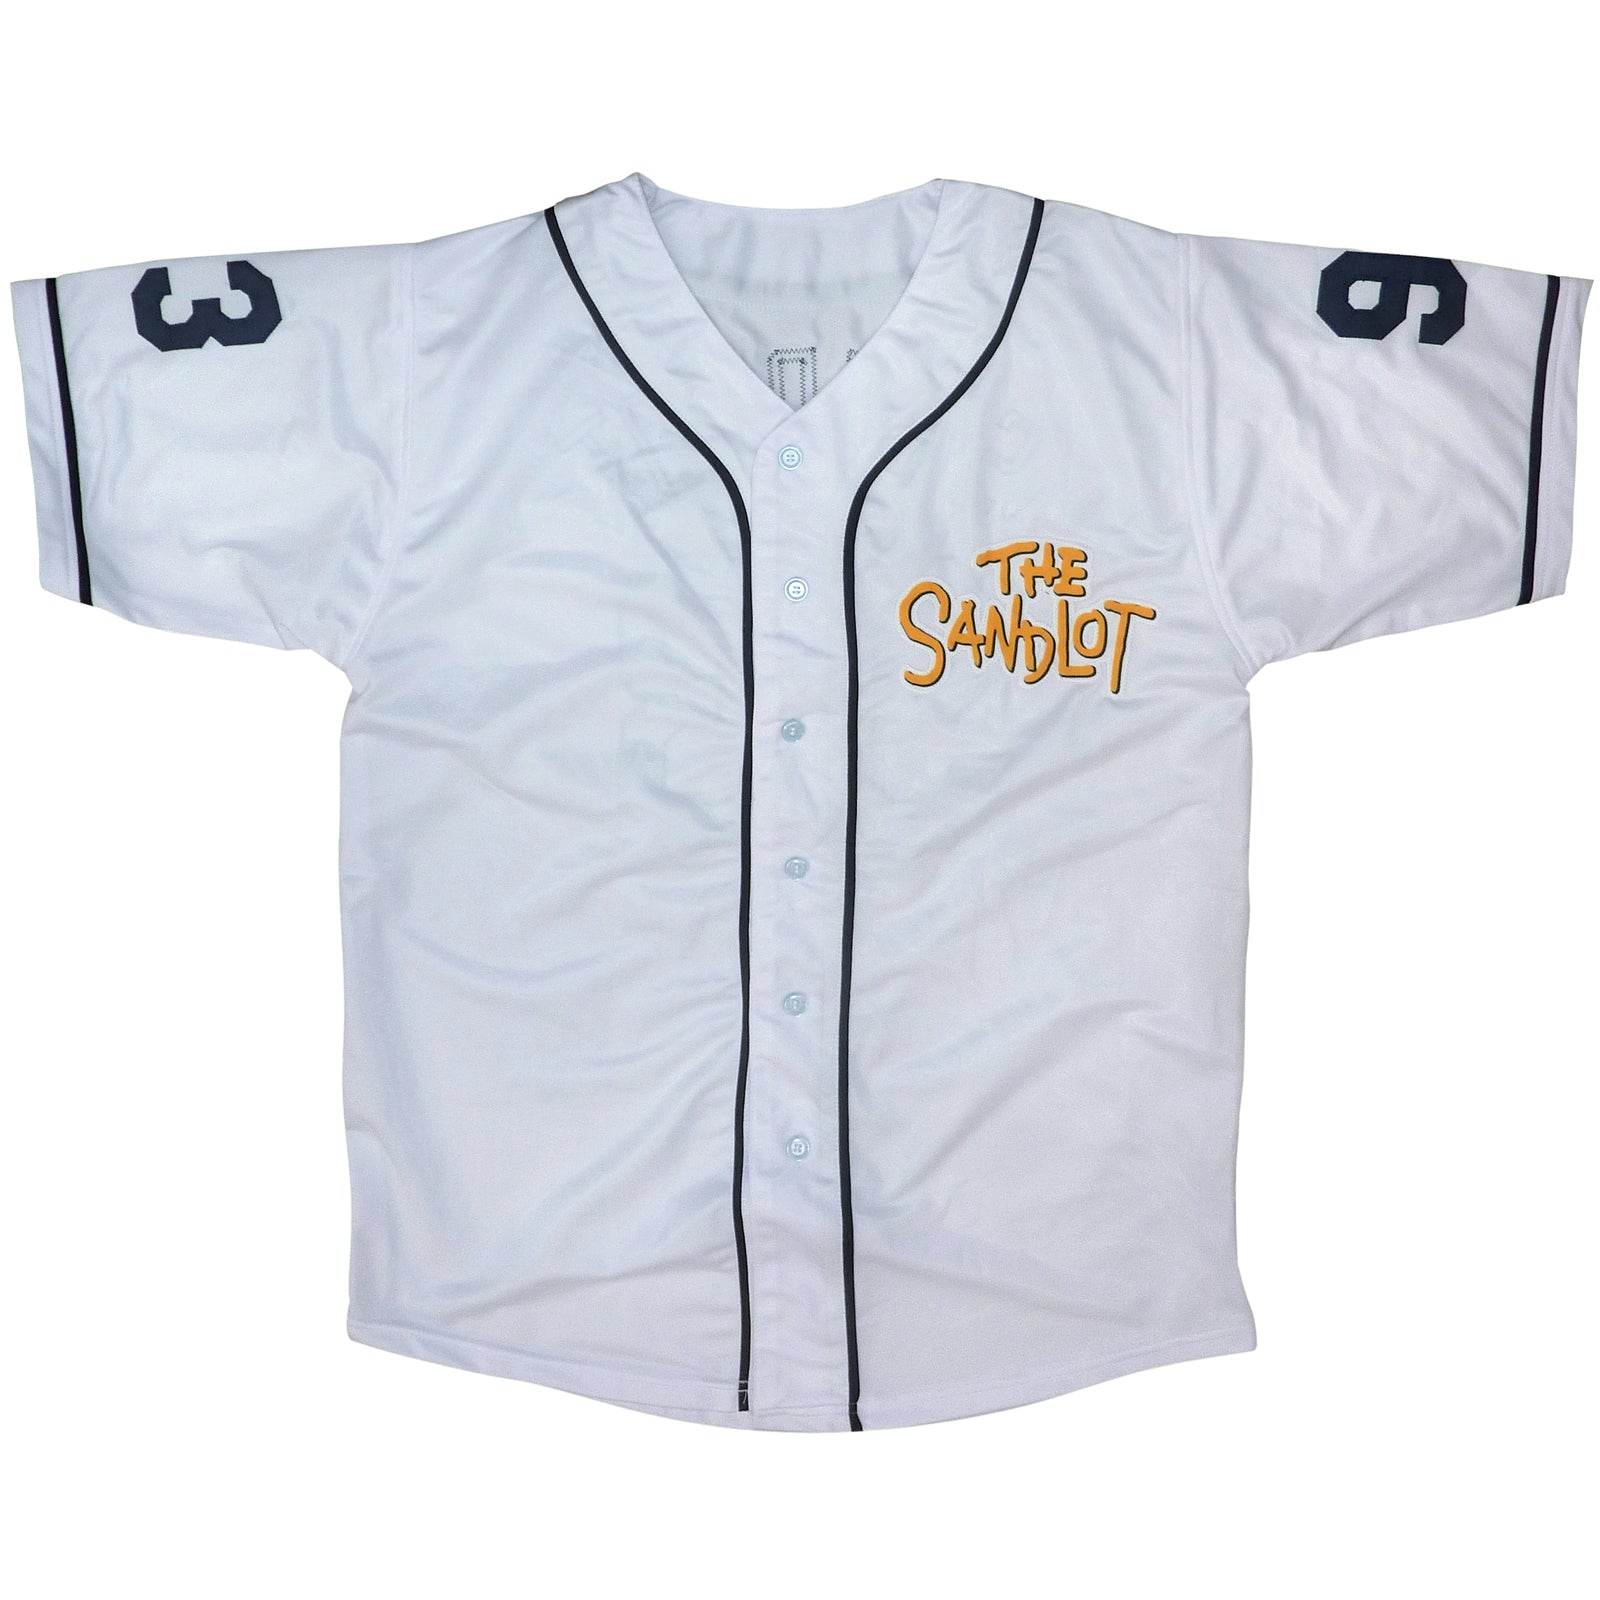 SHL Logo AIK IF Design Custom Name Yellow Baseball Jersey Shirt